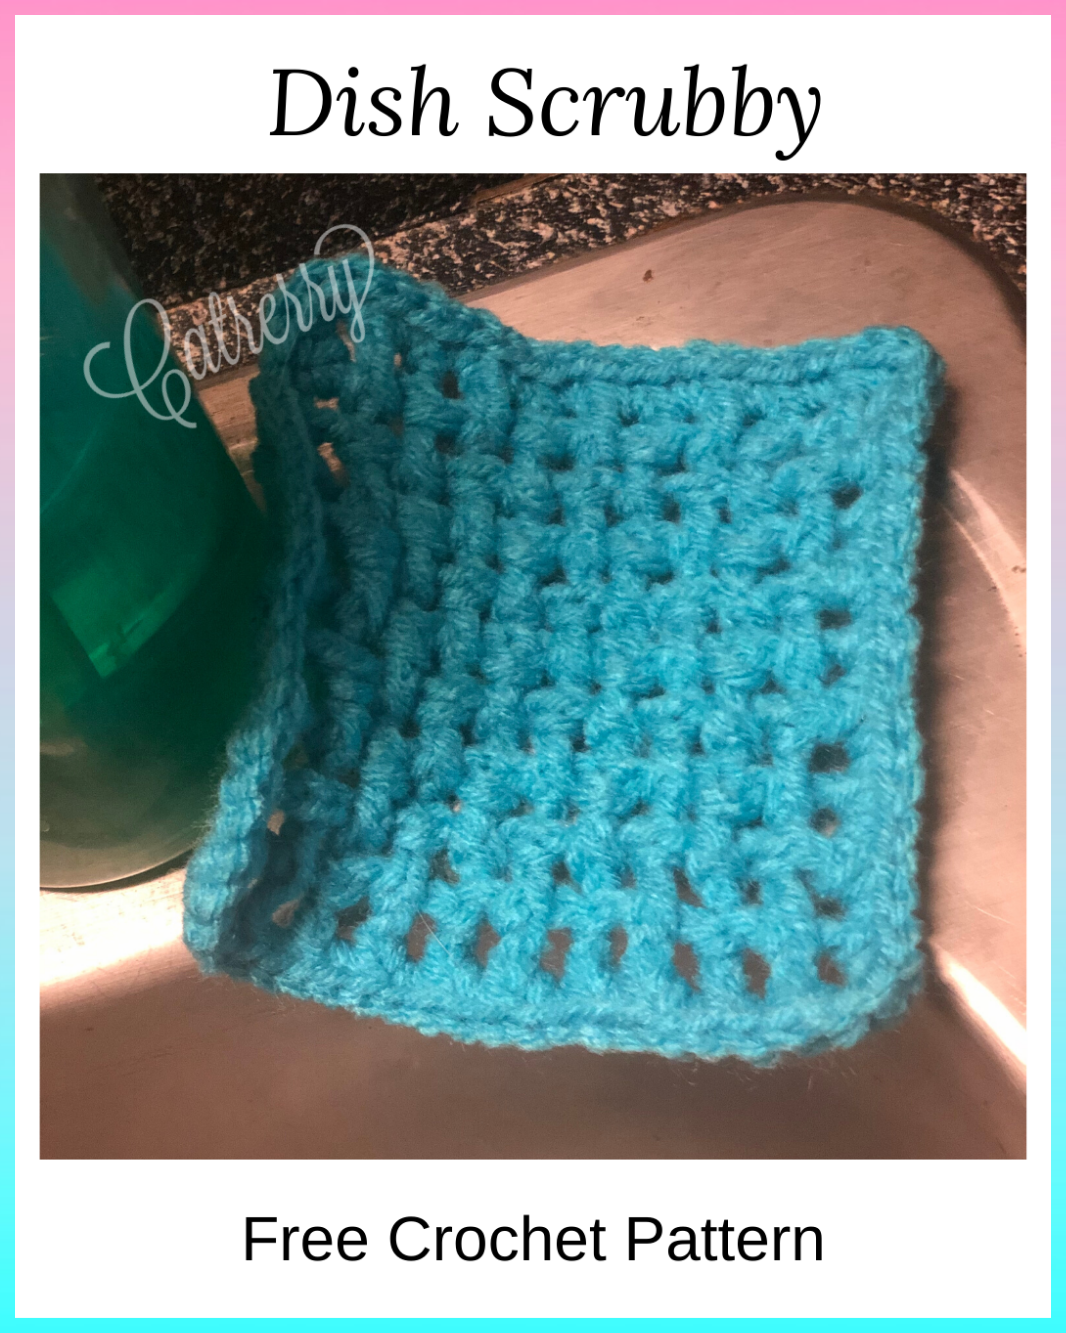 Dish Scrubby Free Crochet Pattern - Catrerry